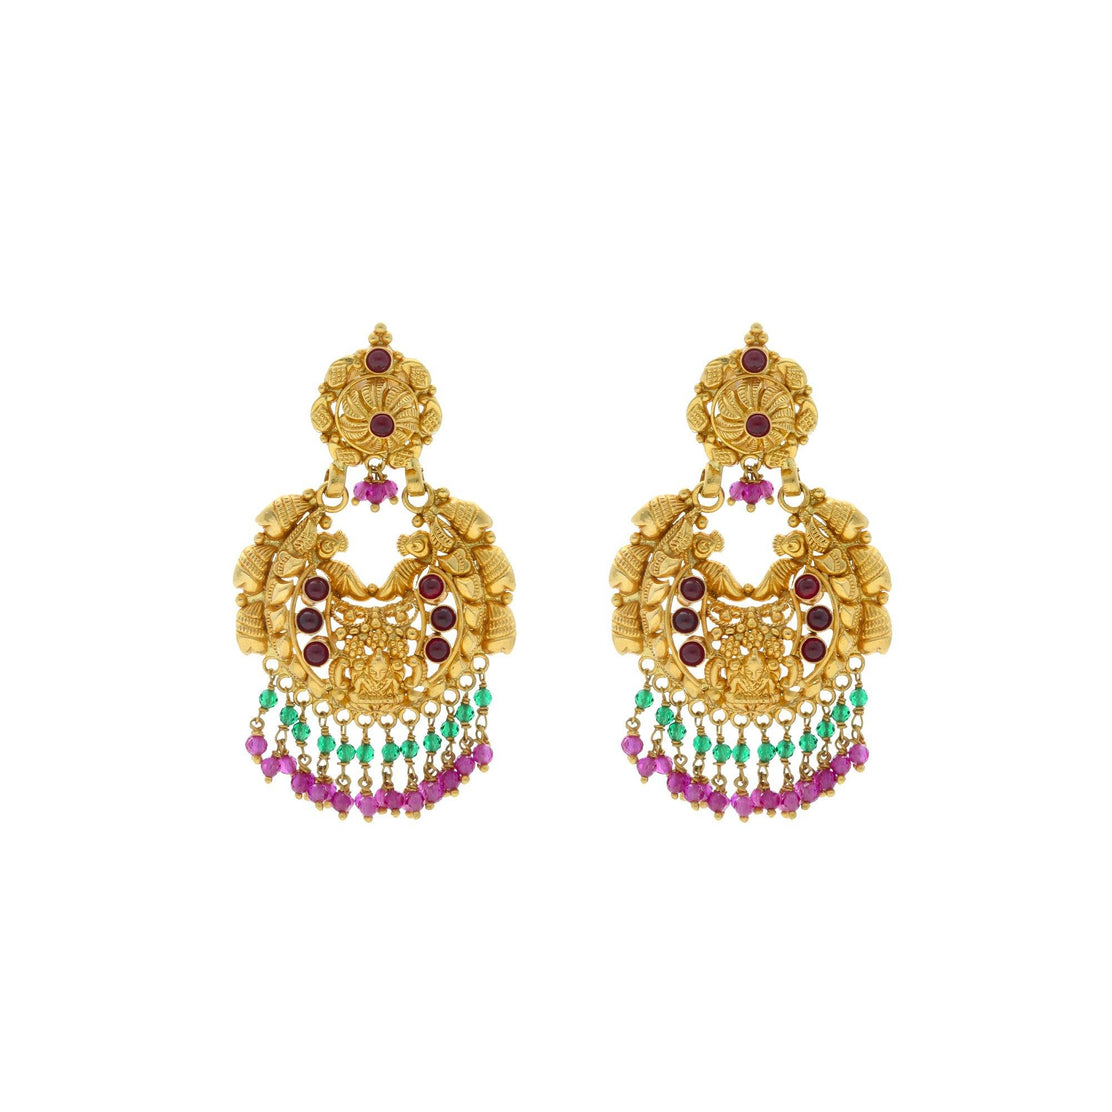 Share 234+ ruby earrings gold designs best